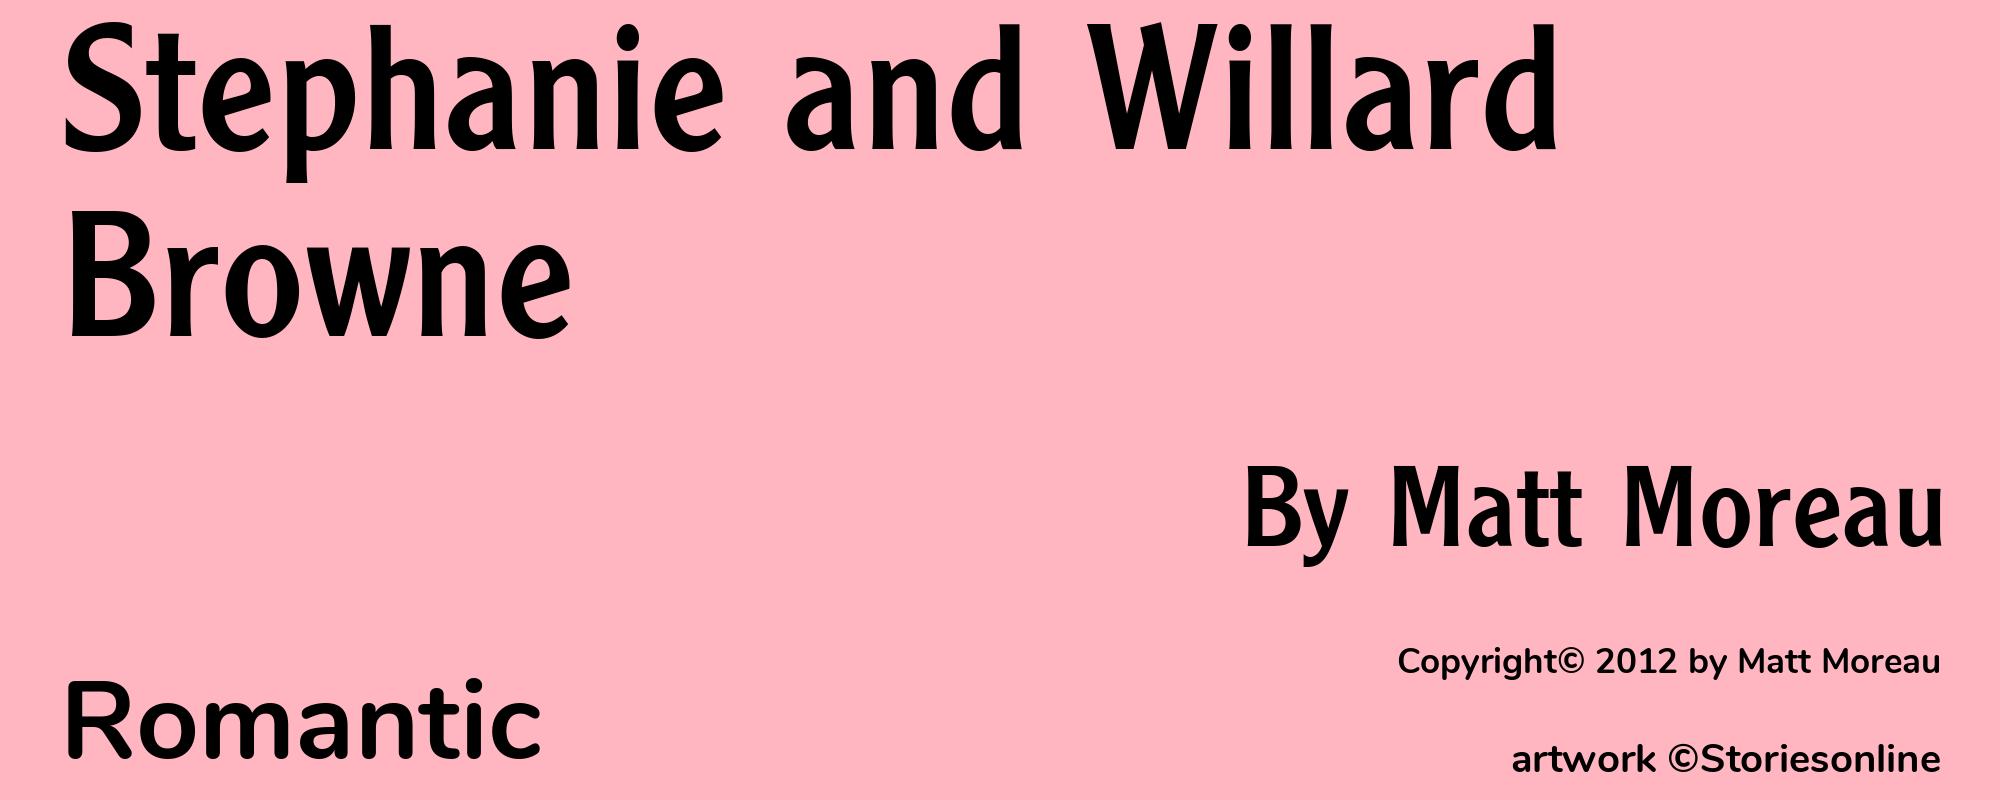 Stephanie and Willard Browne - Cover